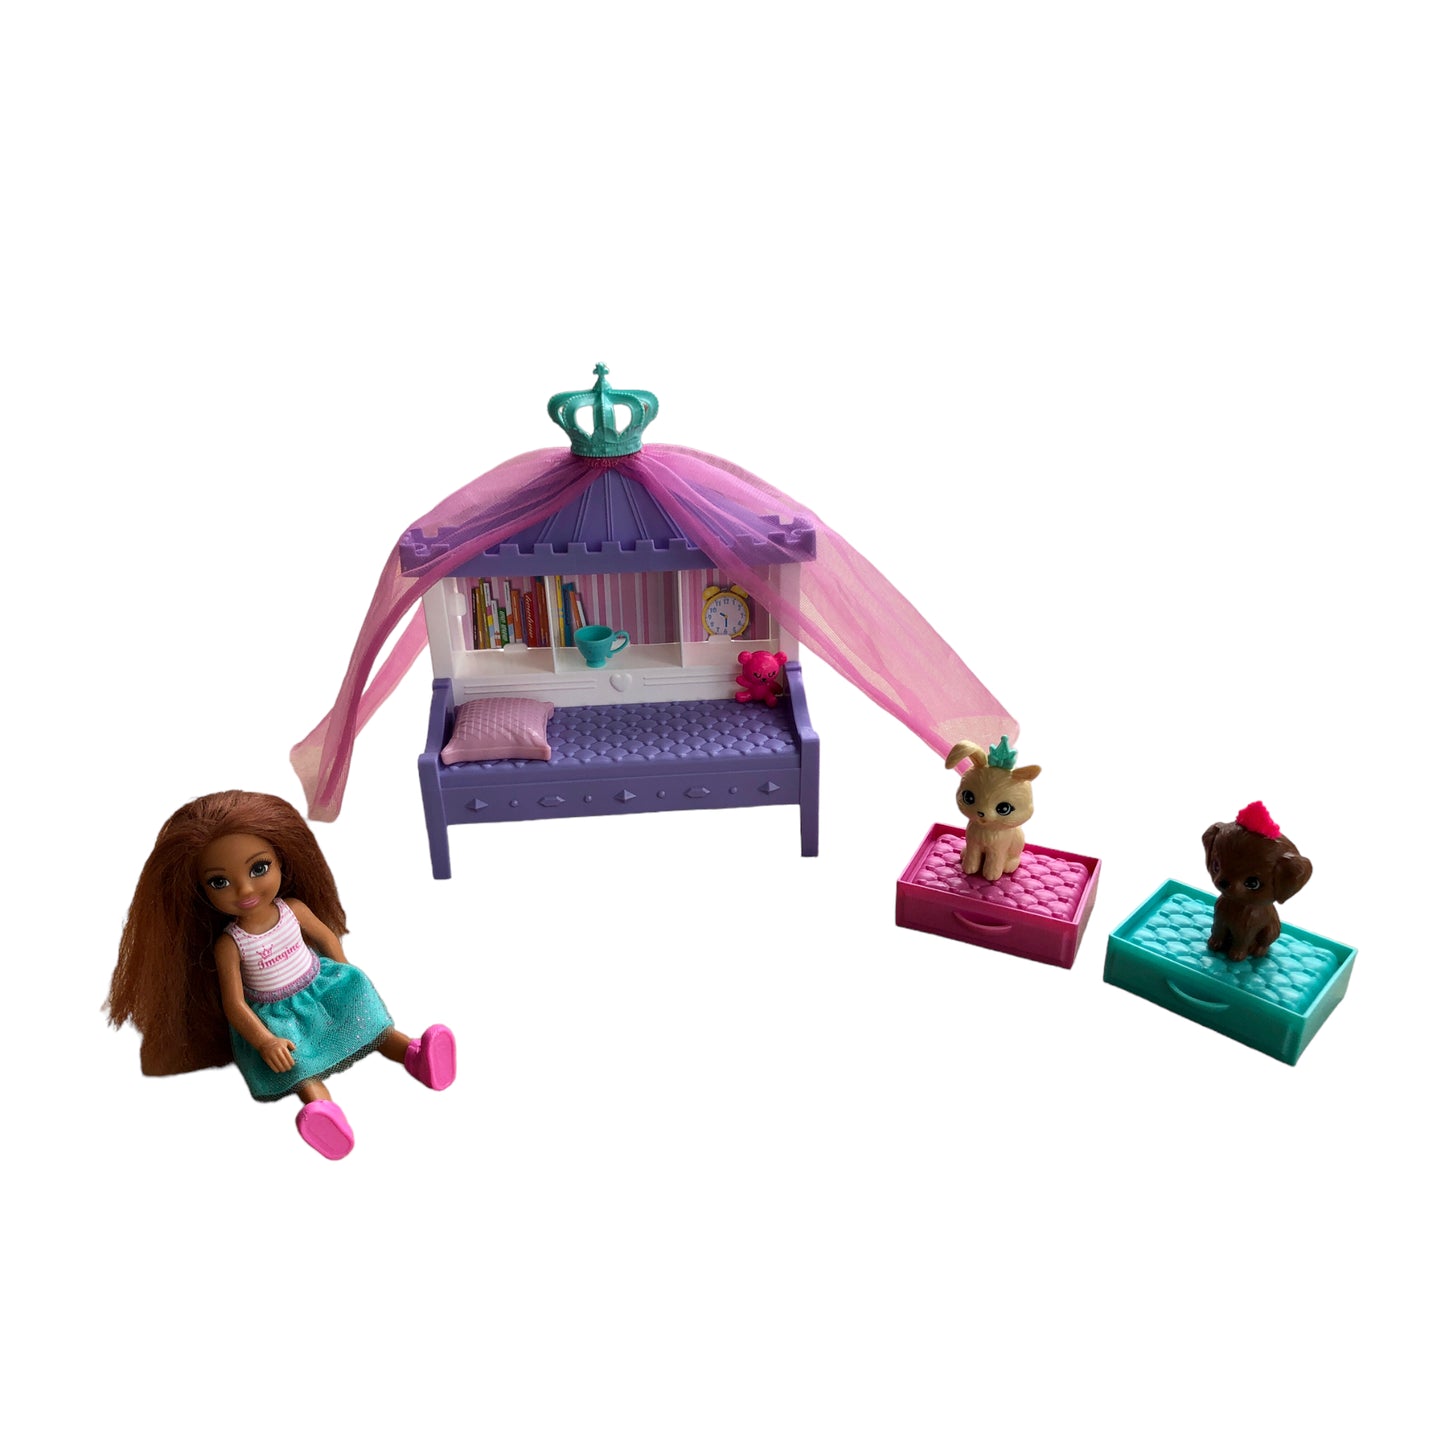 Mattel – Barbie Princess Adventure Chelsea Doll Bedtime Playset